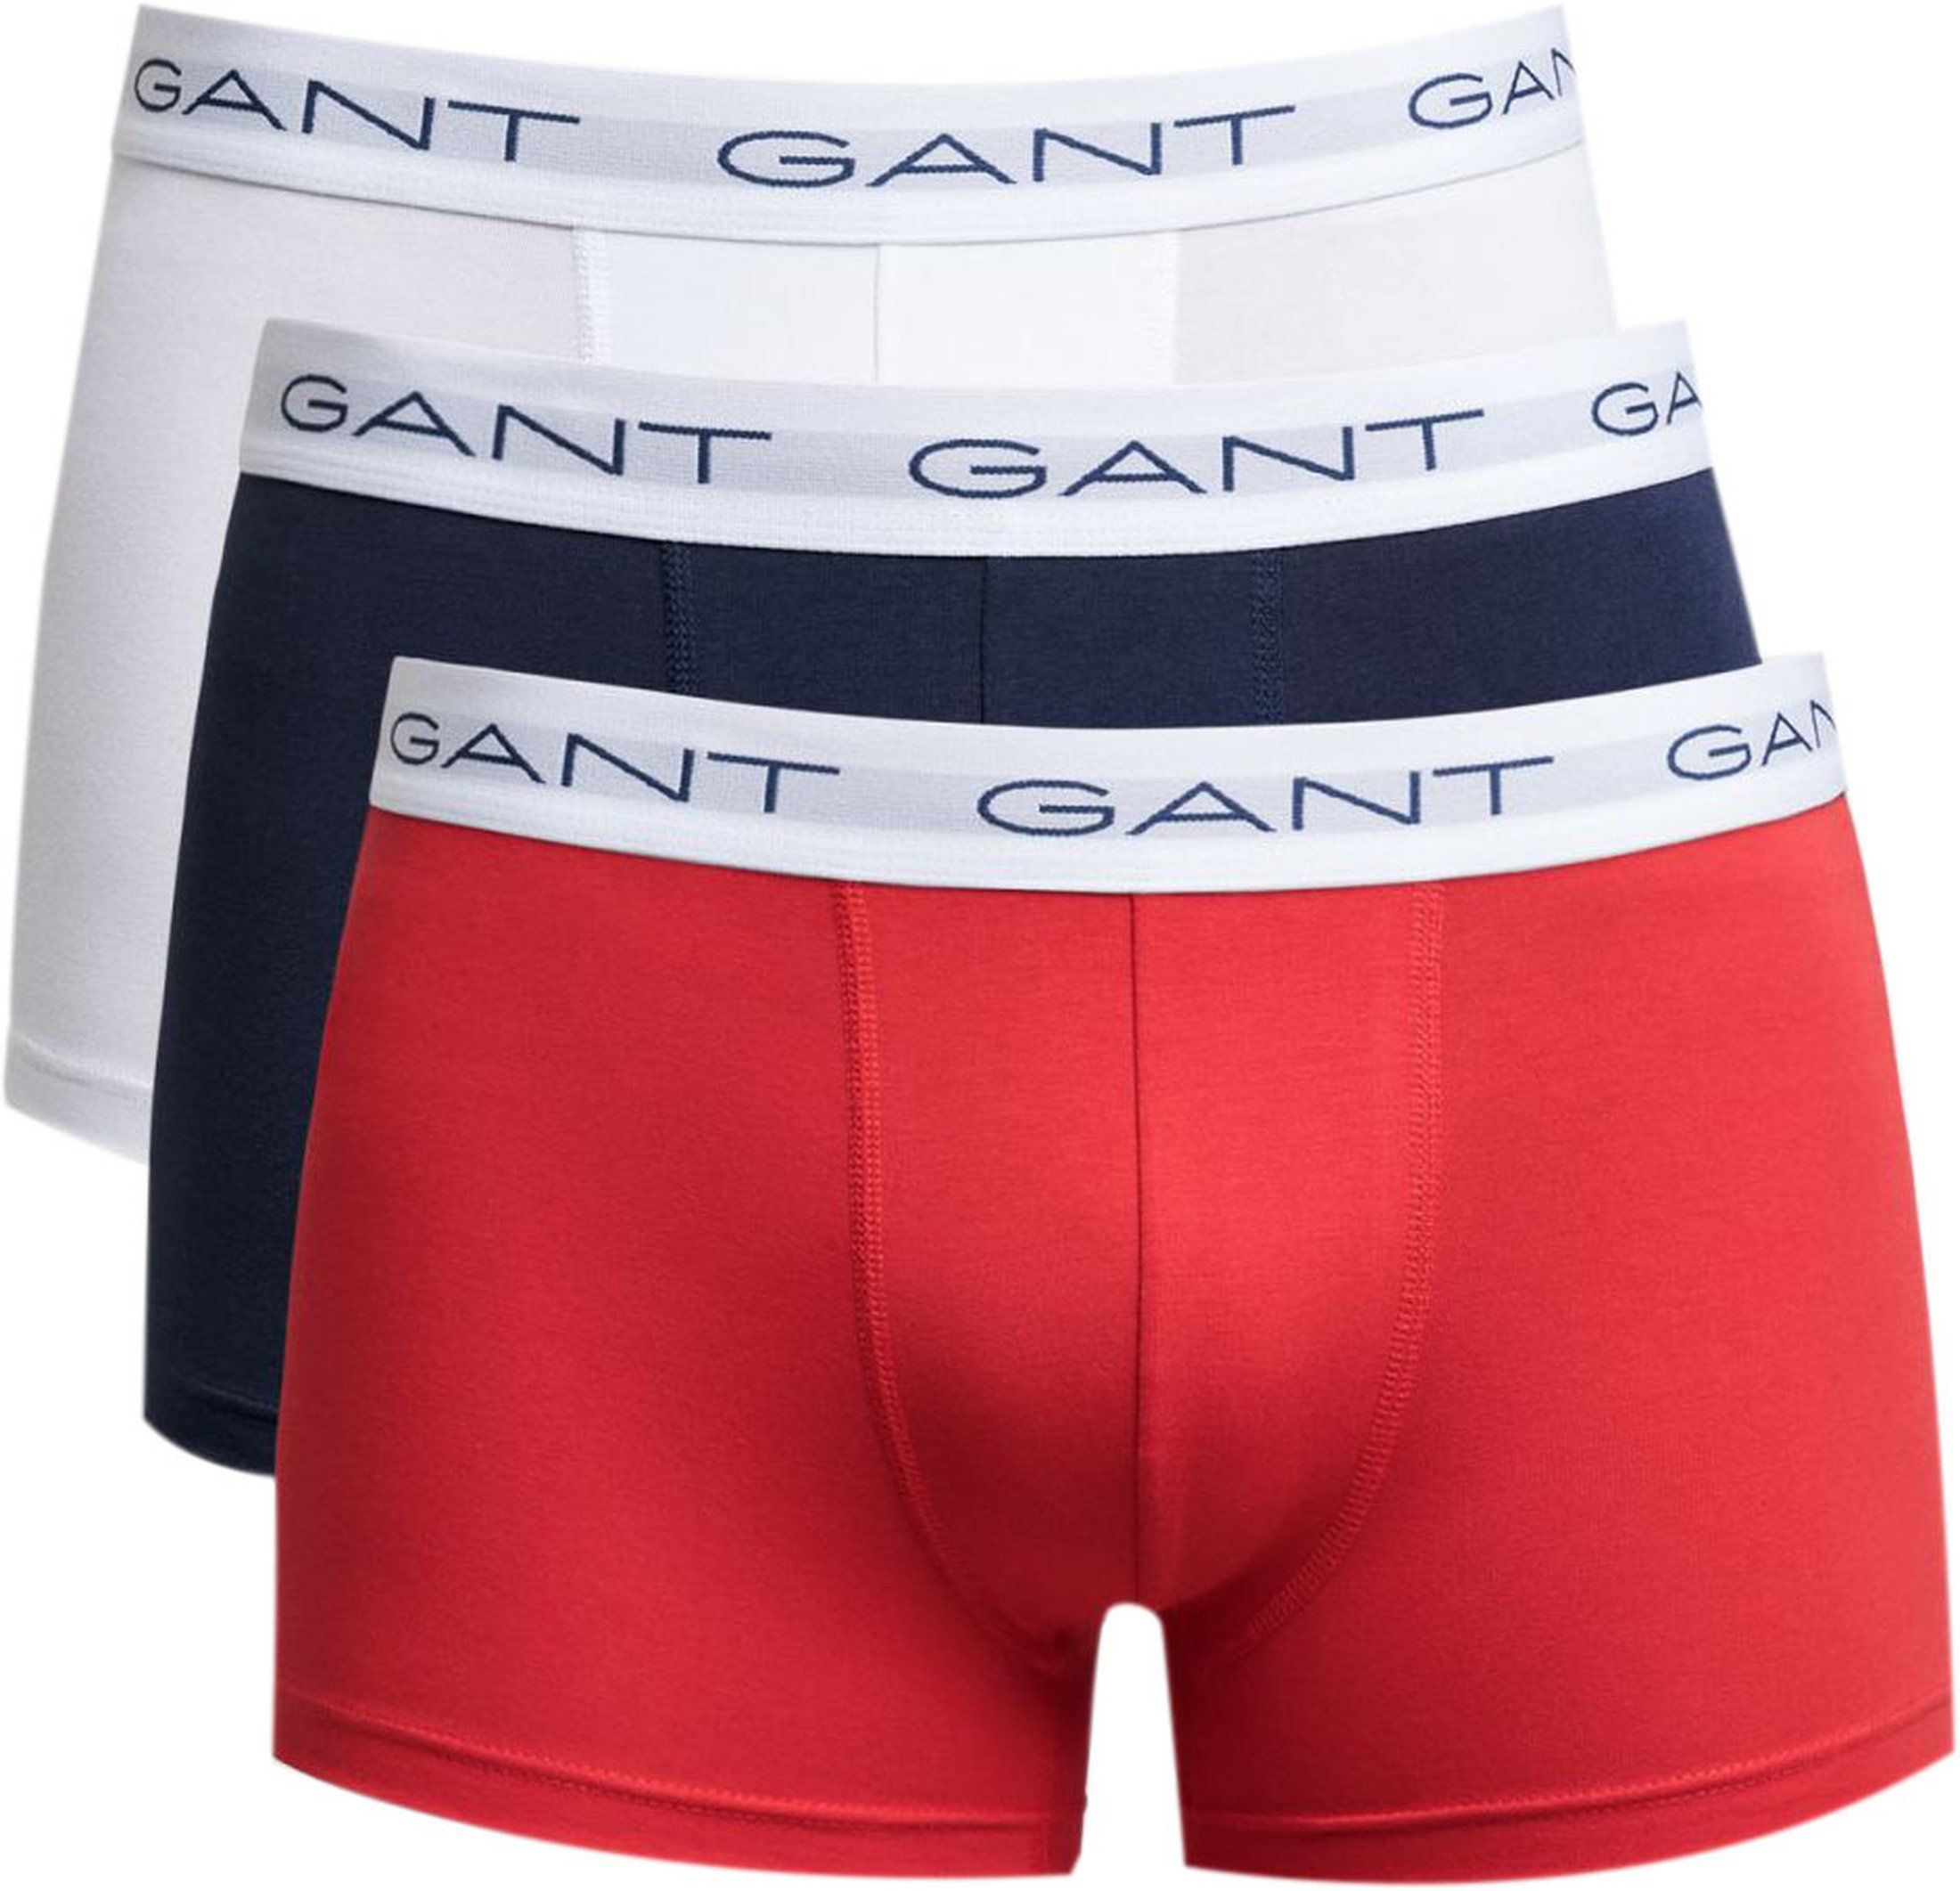 Gant Boxers 3-Pack Multicolor Red White Dark Blue size L